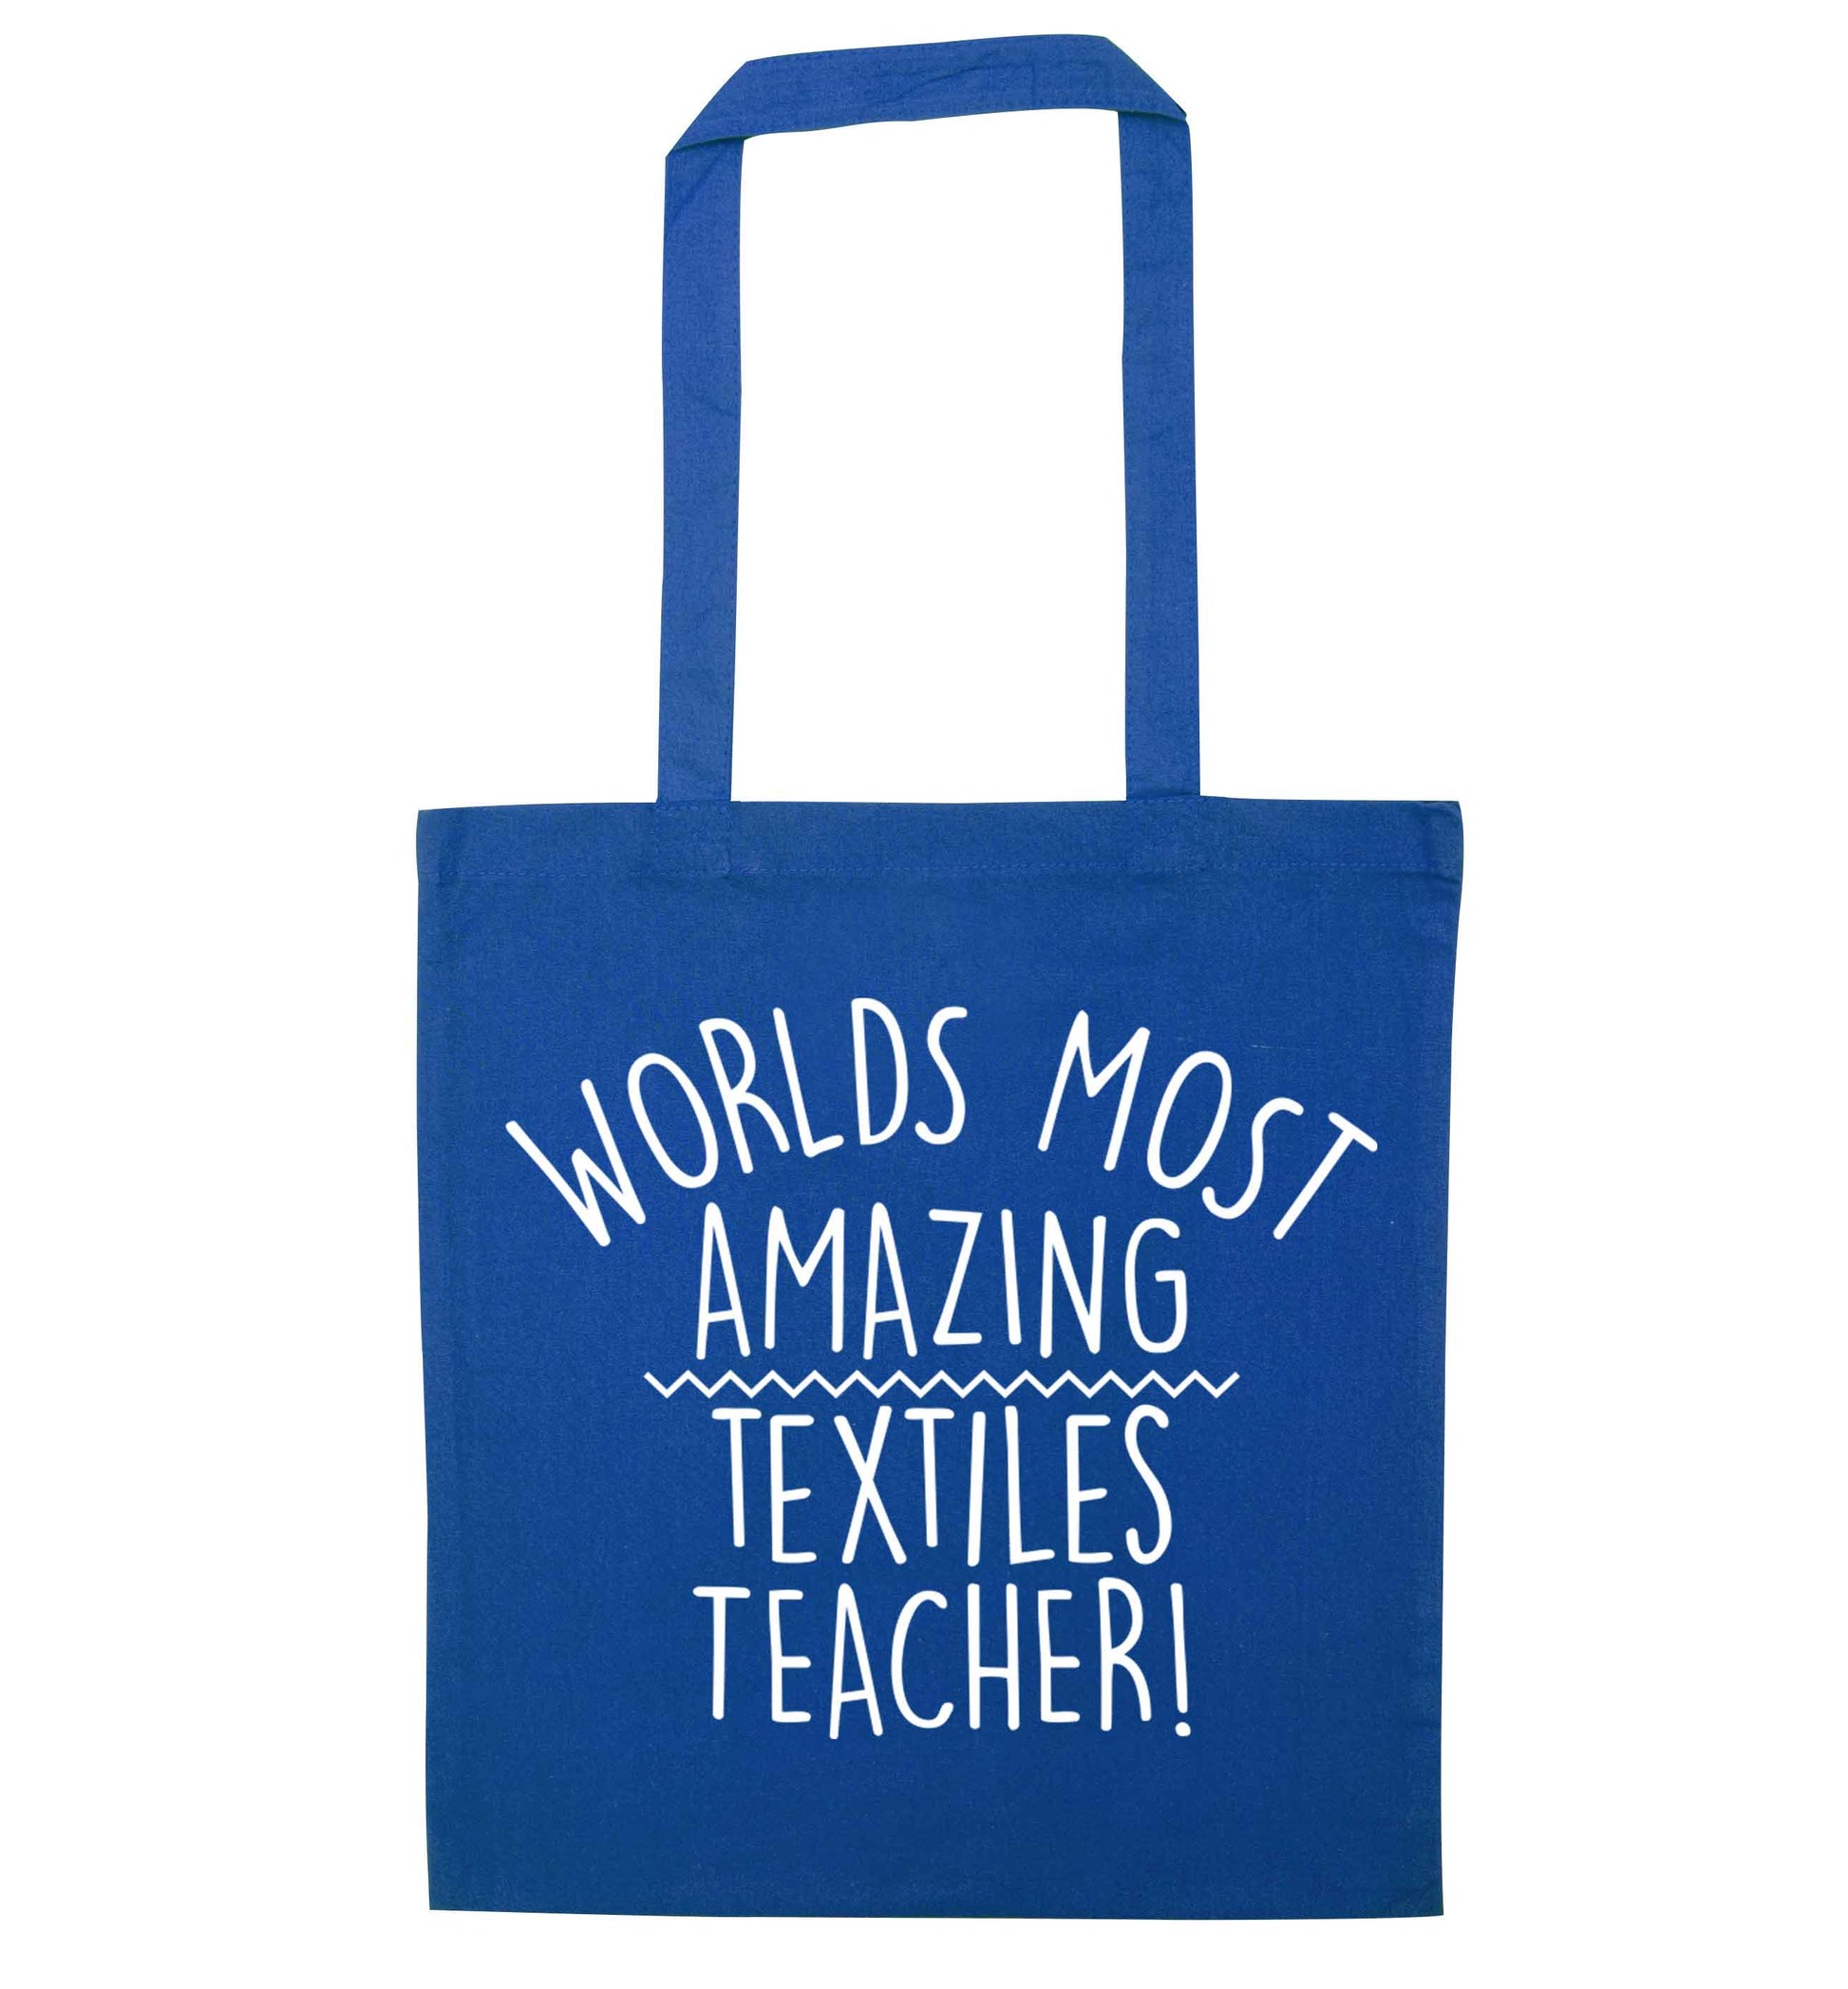 Worlds most amazing textiles teacher blue tote bag